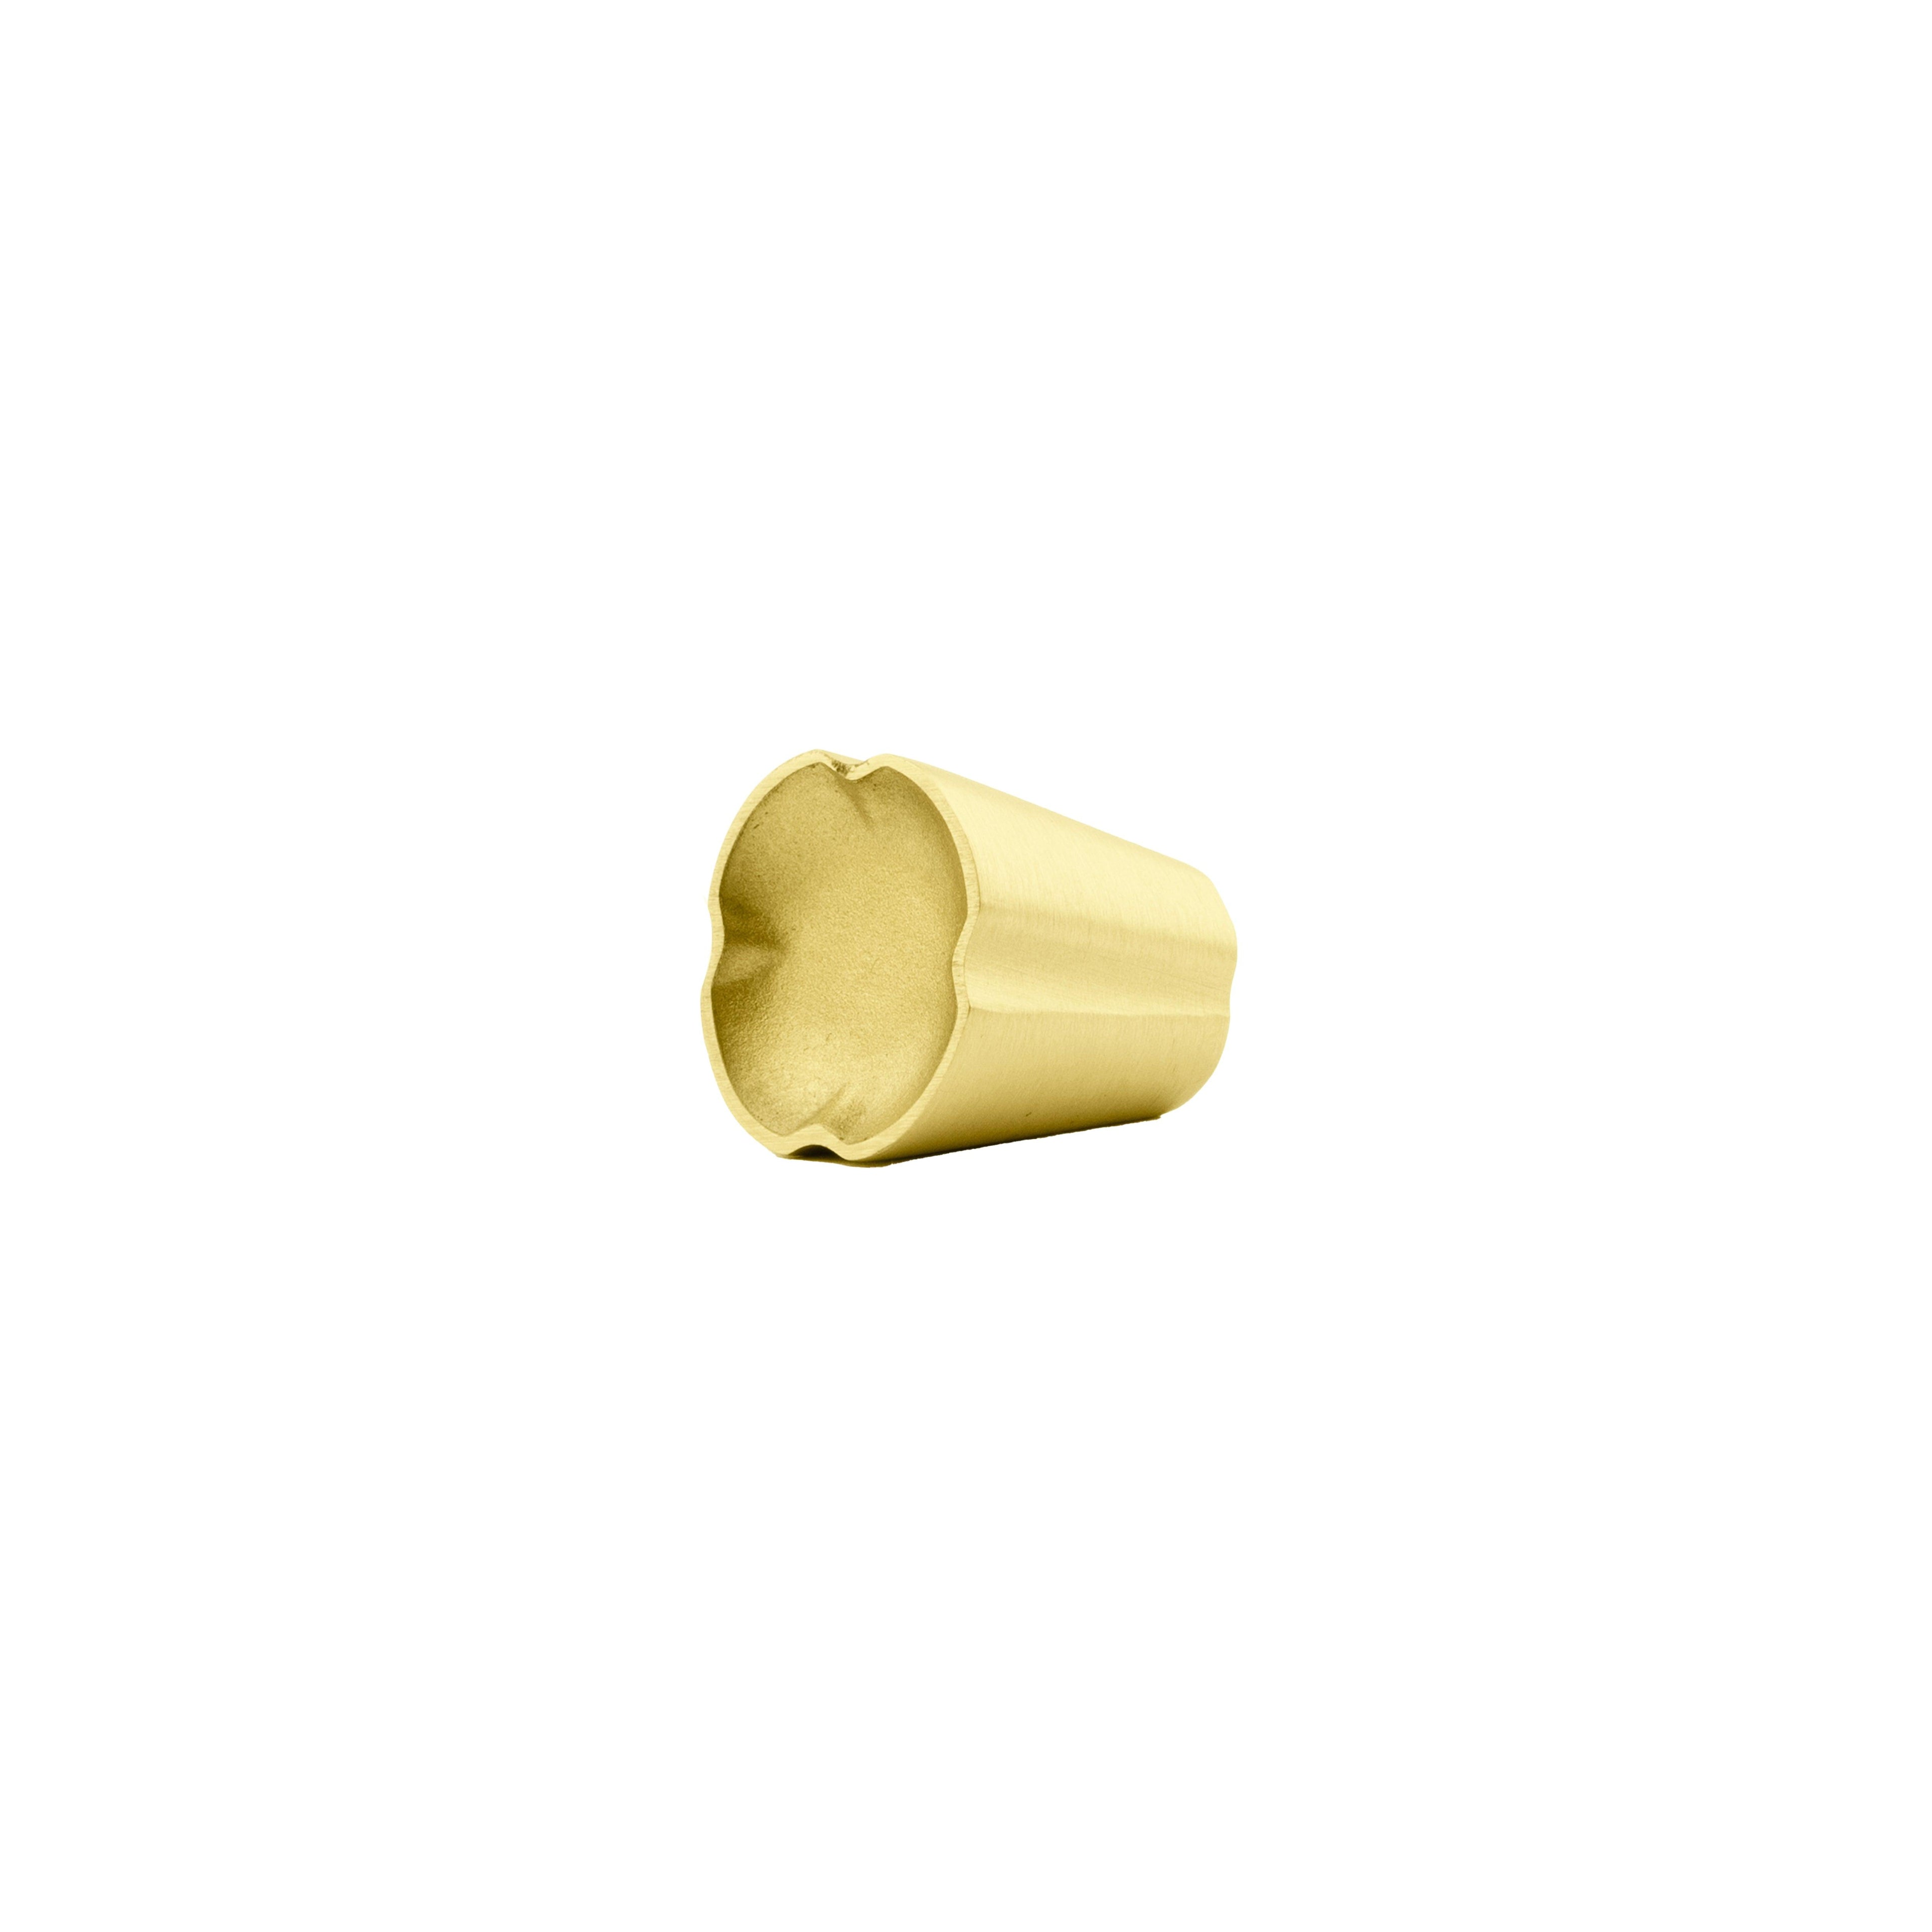 Clover Knob Knob 23mm / Gold / Brass - M A N T A R A